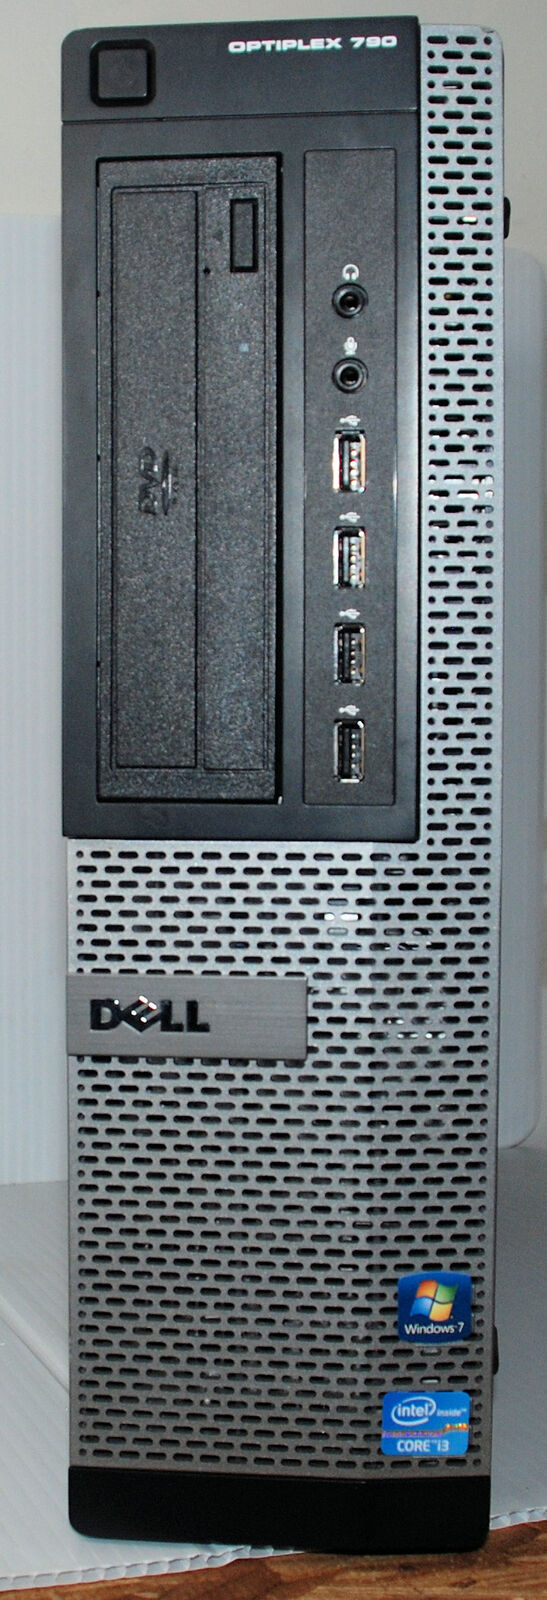 Dell OptiPlex 790 Desktop Intel Core i3 3.3 GHZ 4GB RAM 500GB HD Win 7 Pro COA